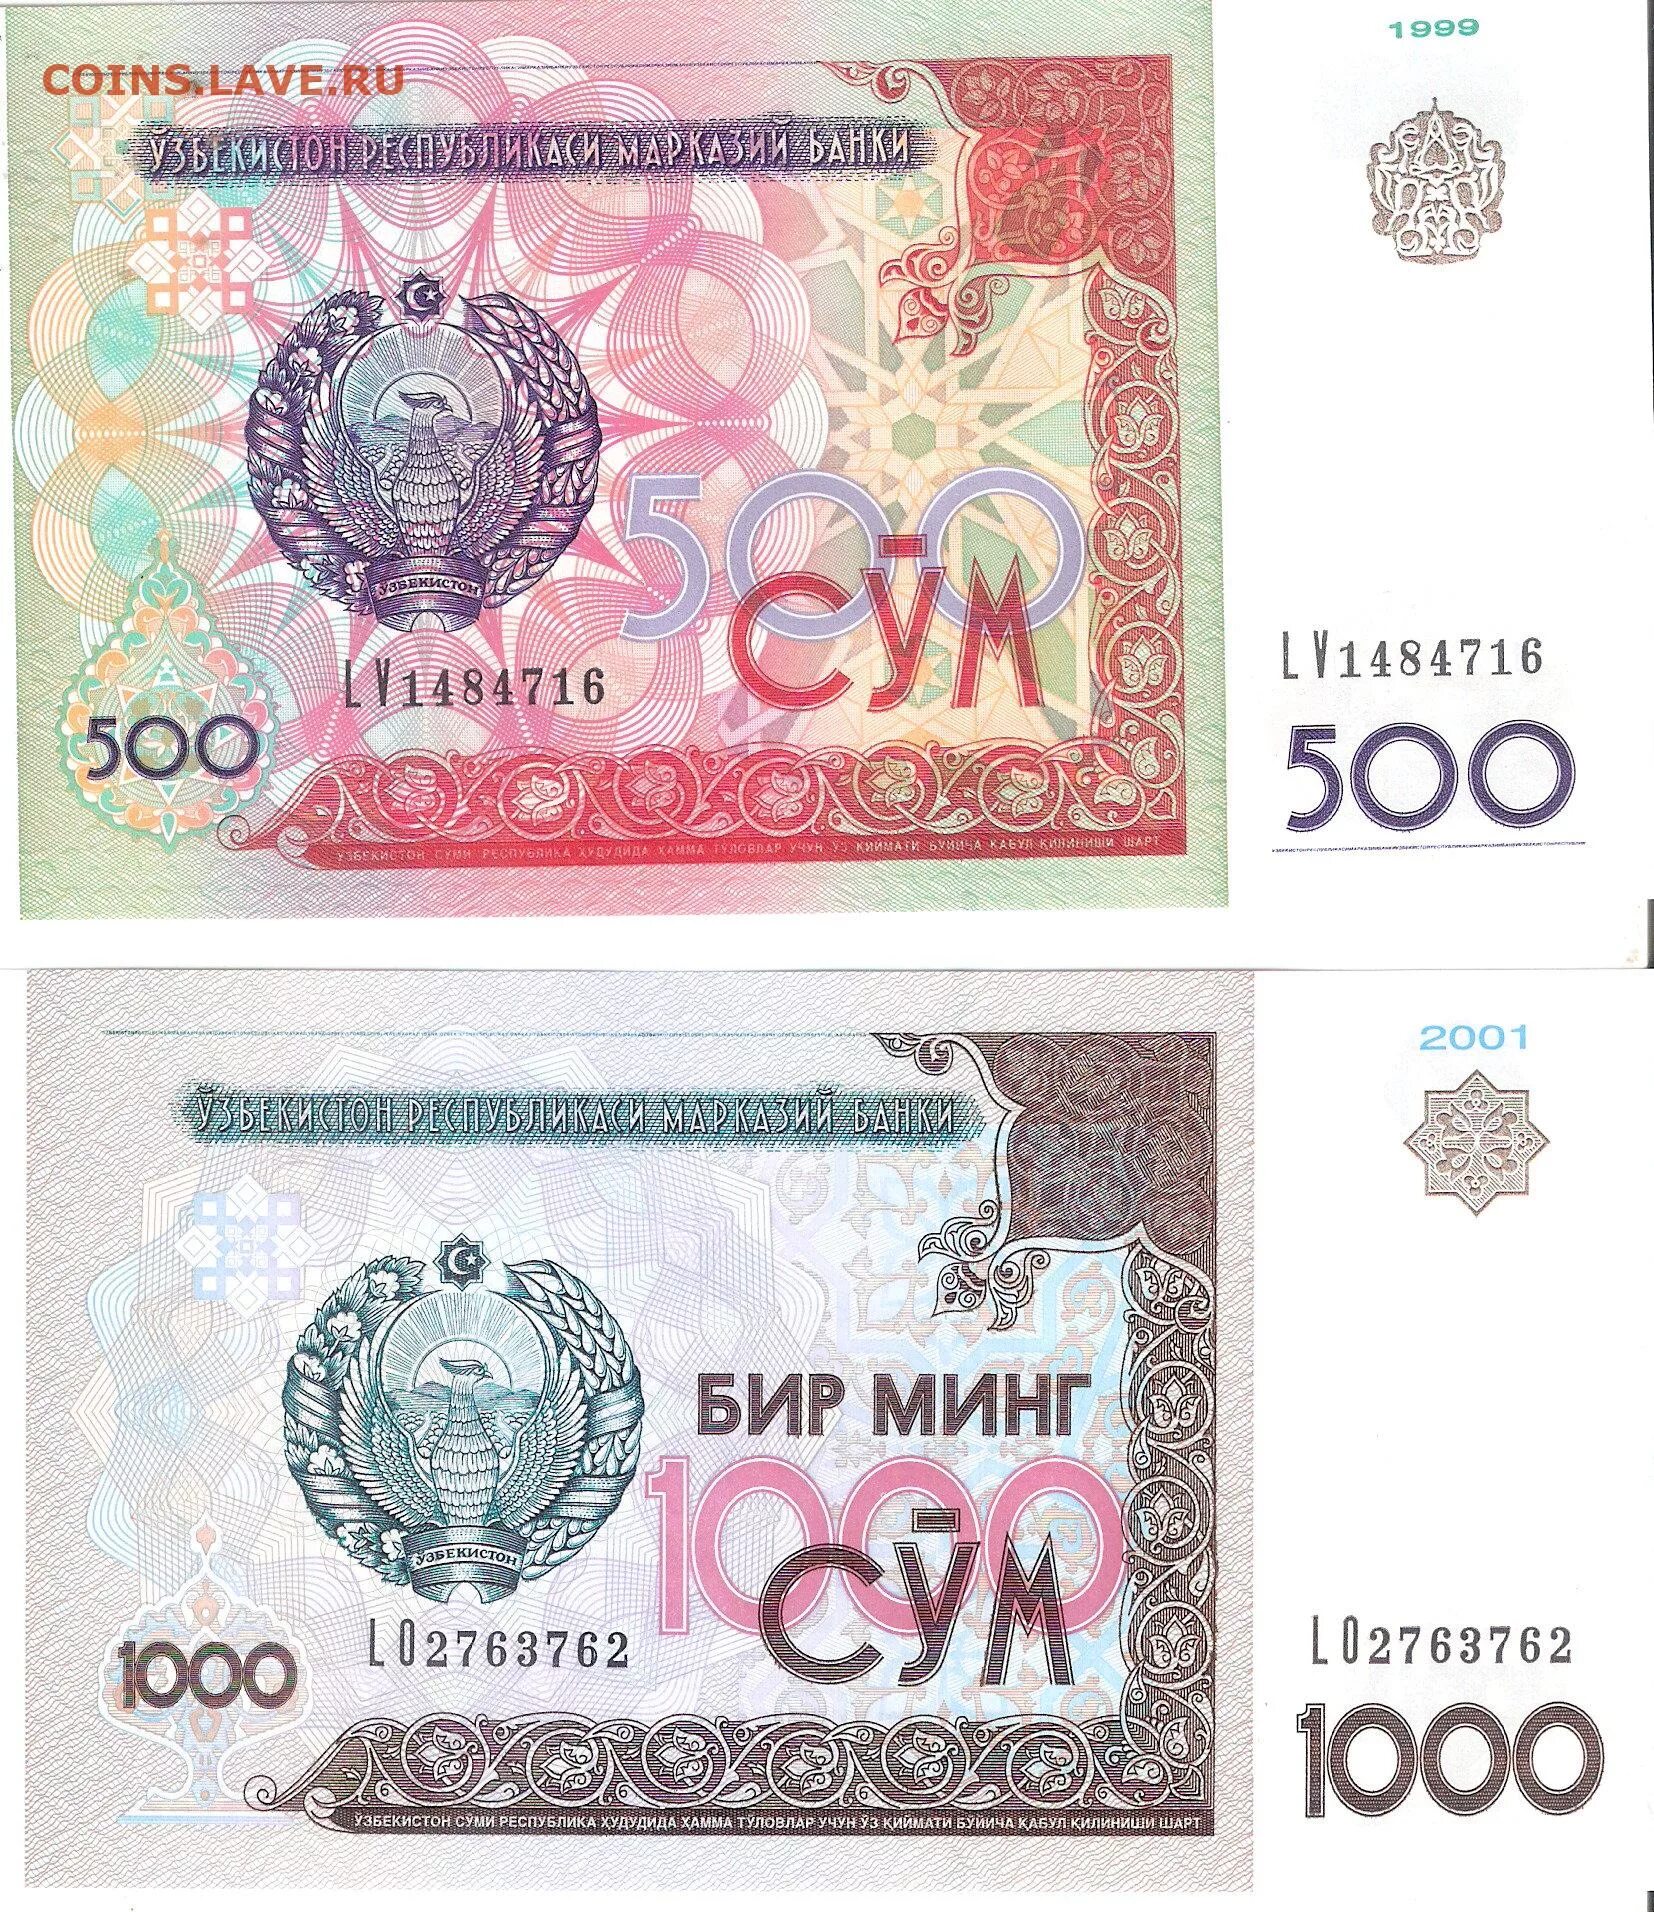 500 Сўм. Узбекистан 500 сом 1999. Банкнота 500 сум Узбекистан. Купюра Узбекистана 1000.